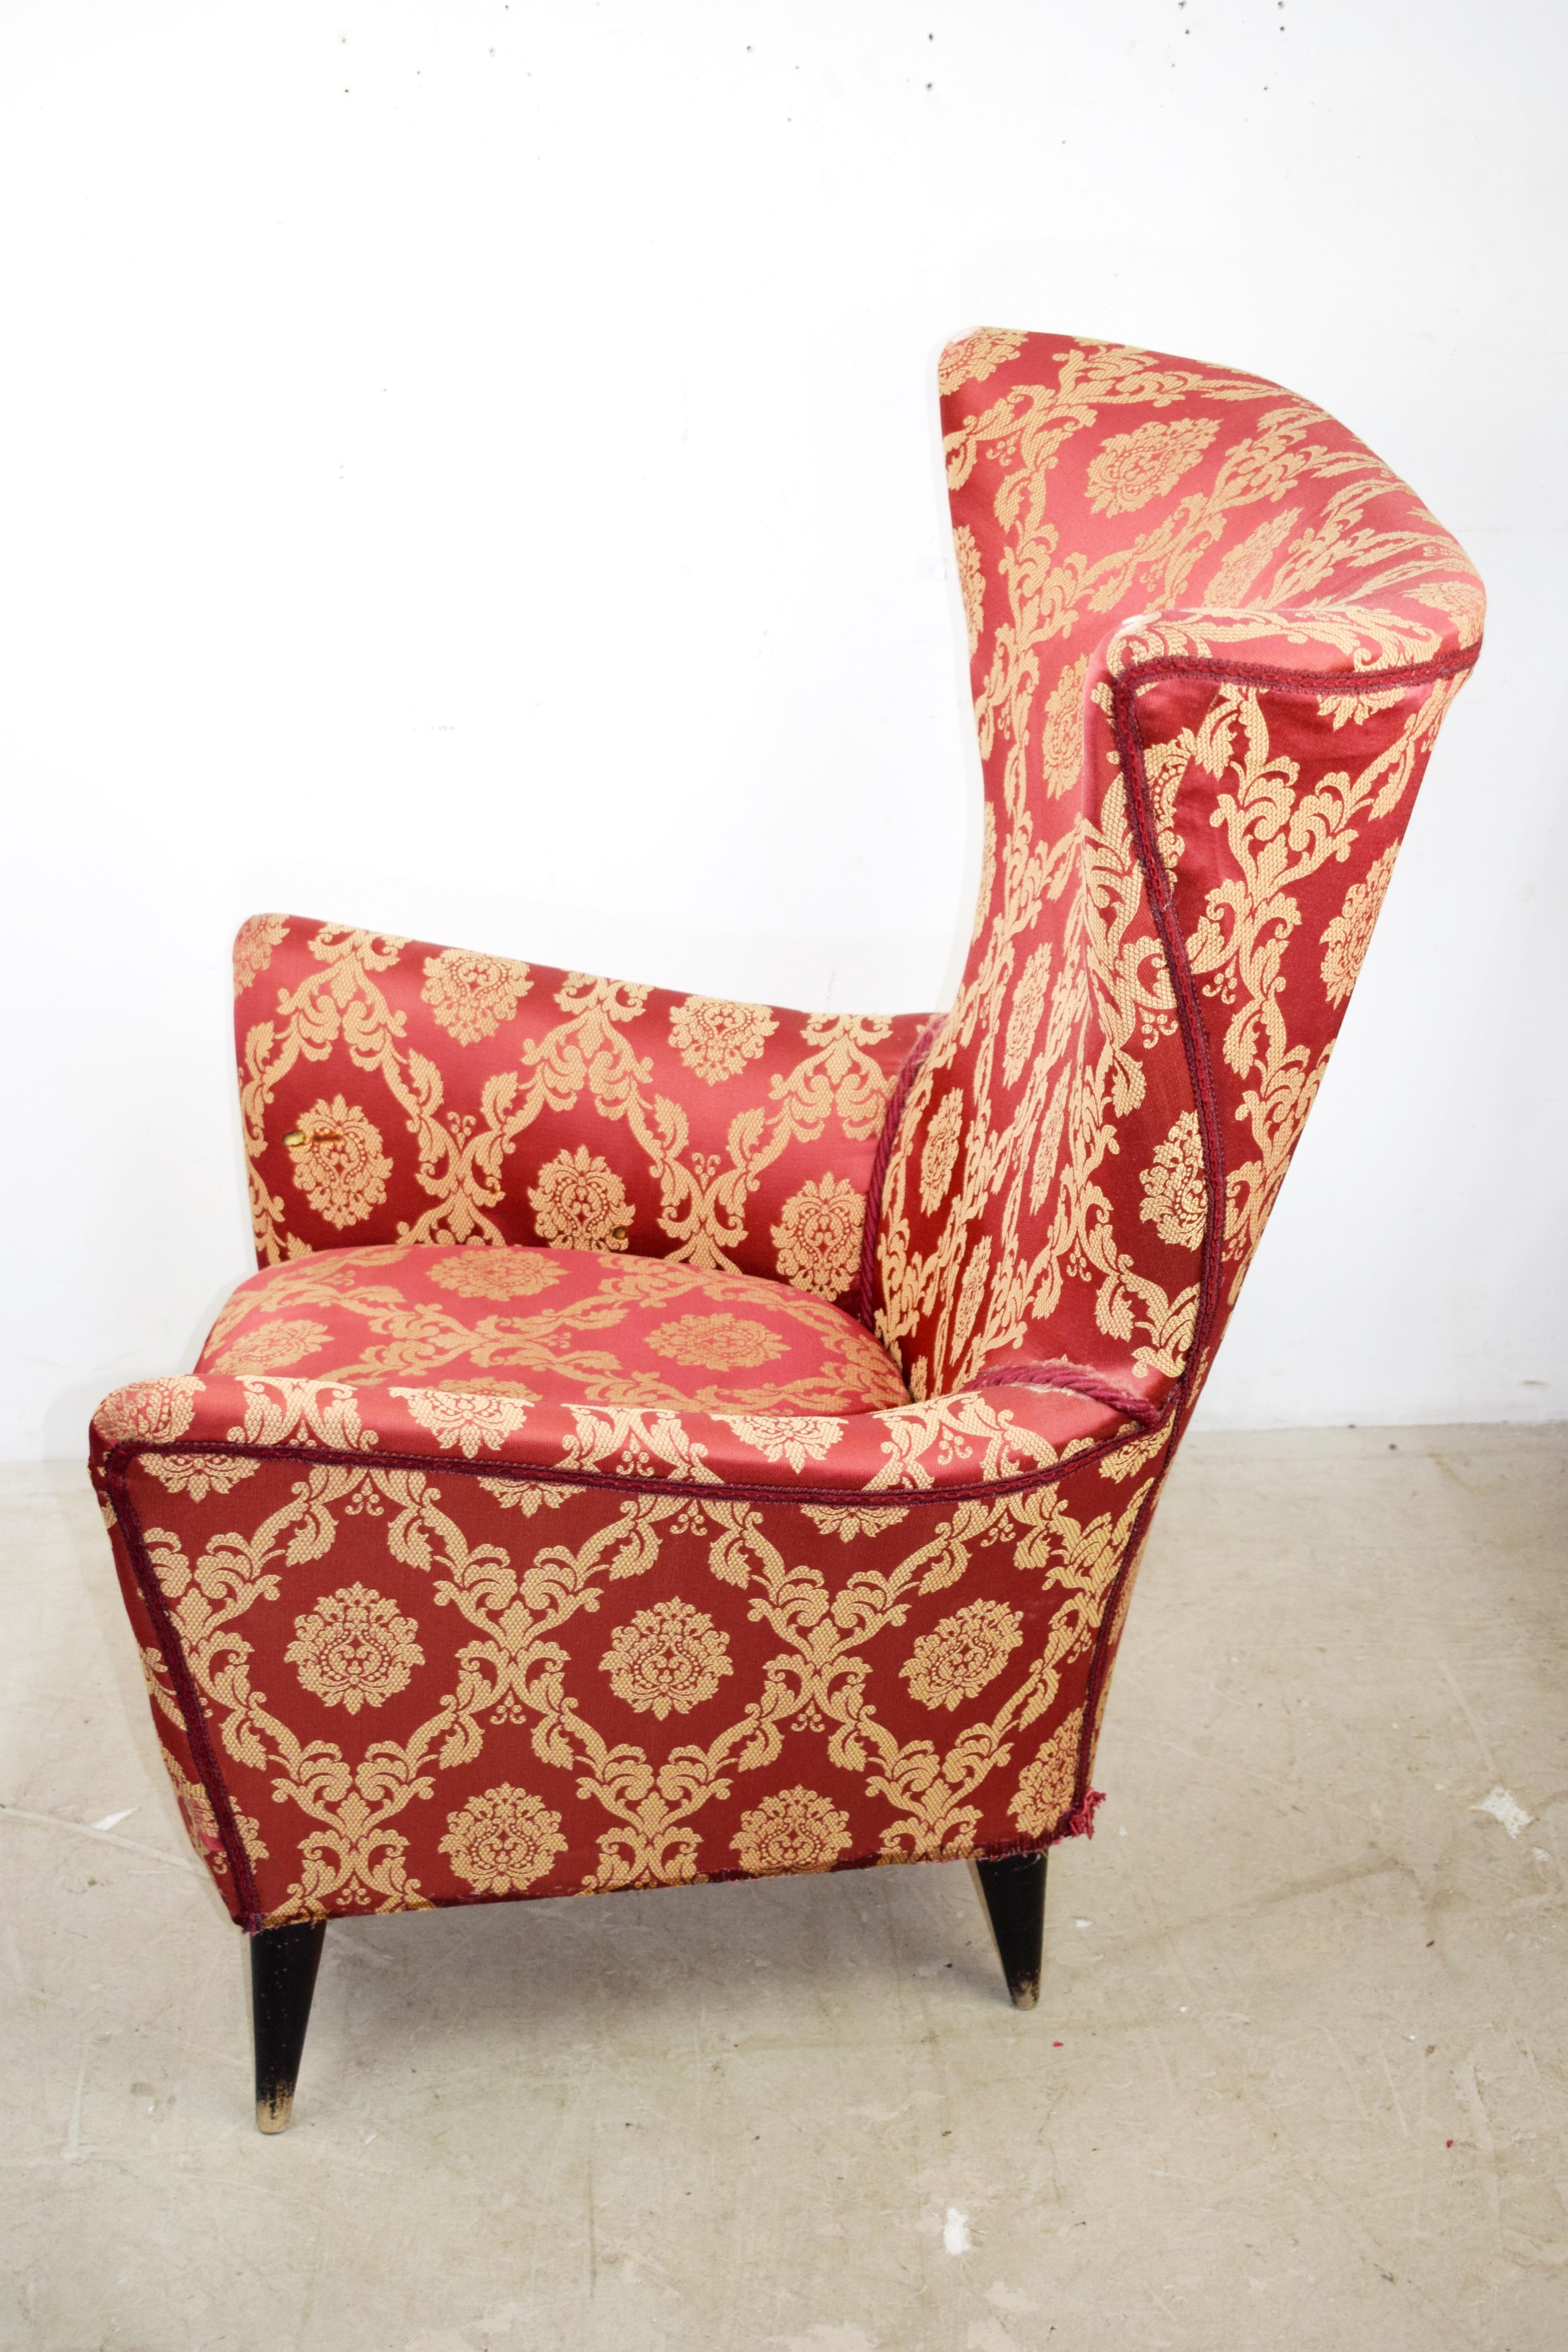 Italian armchair, 1960s.
Dimensions: H=100 cm; W=75 cm; D=72; Height seat = 40cm.